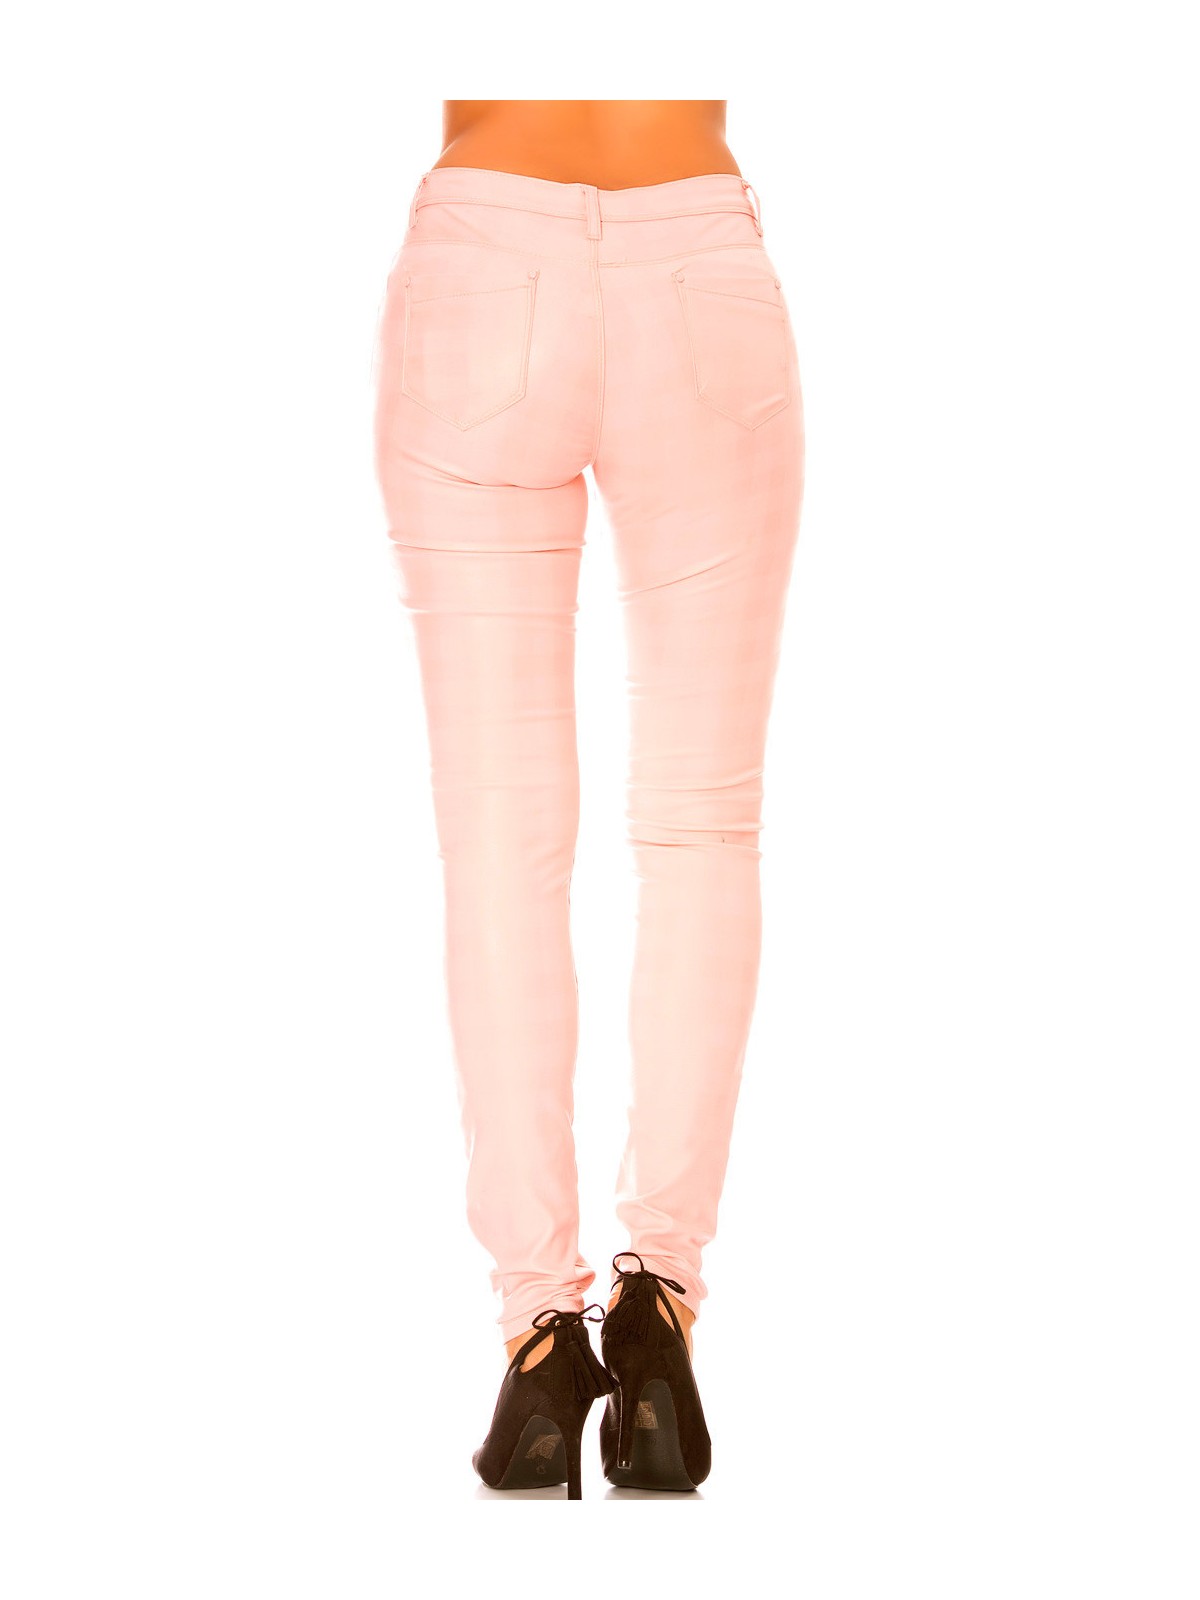 Pantalon rose brillant avec poche et motif carreau . Pantalon mode s1799-2 - 5